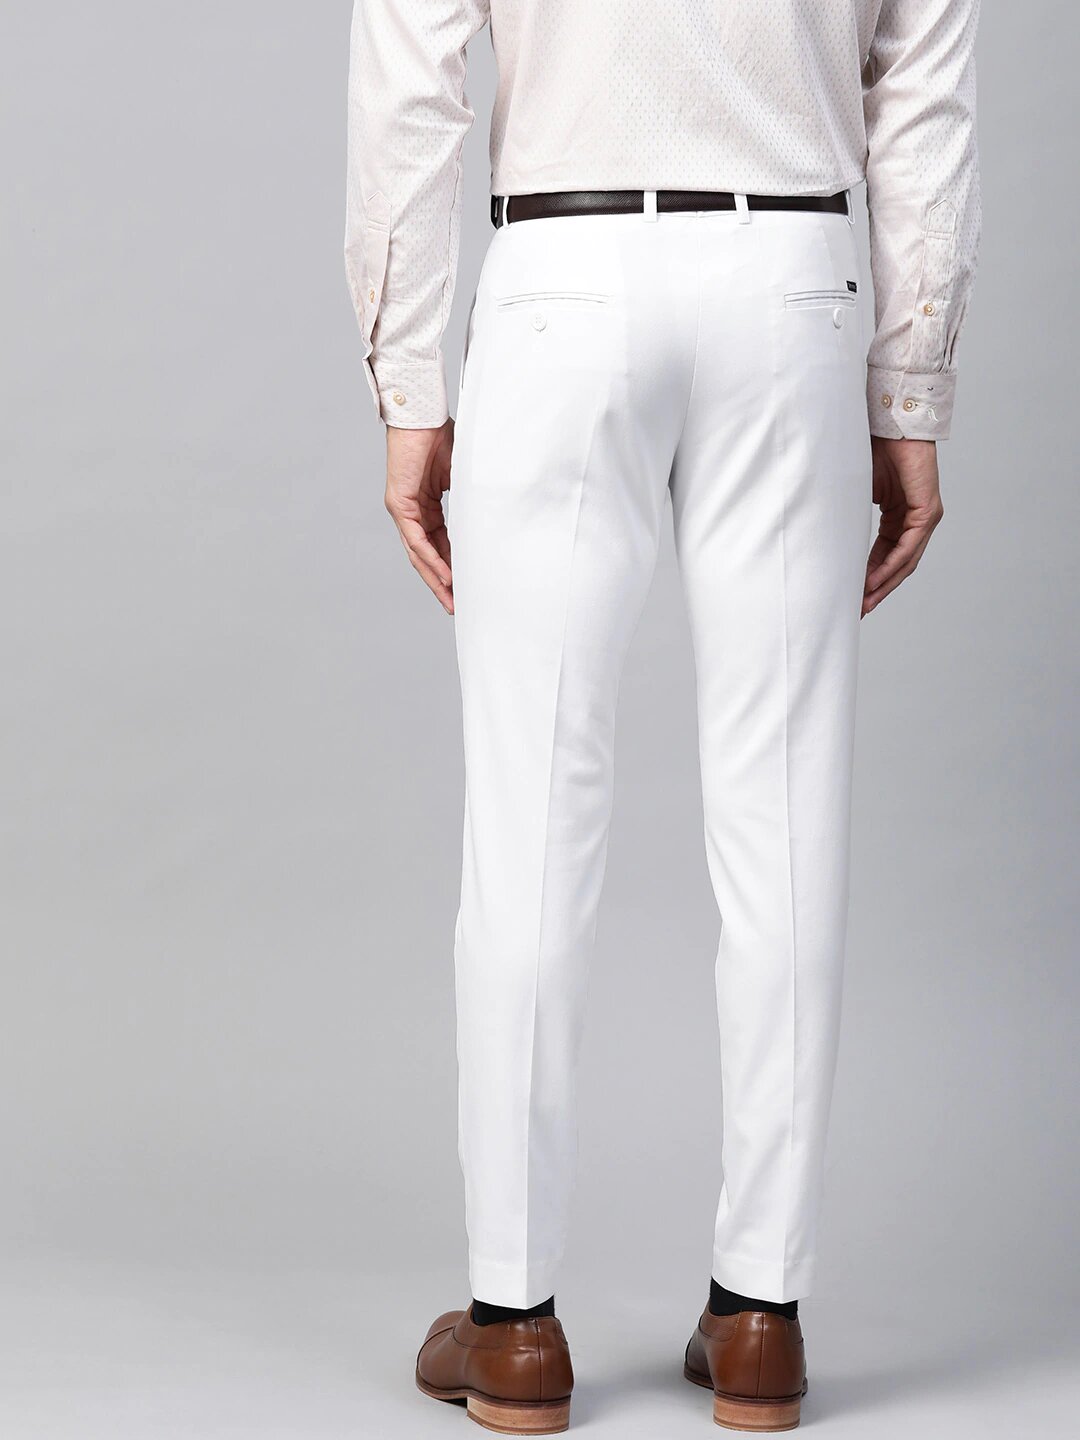 Buy White Cotton Slim Fit Jama Pants for Men Online at Fabindia | 20028676